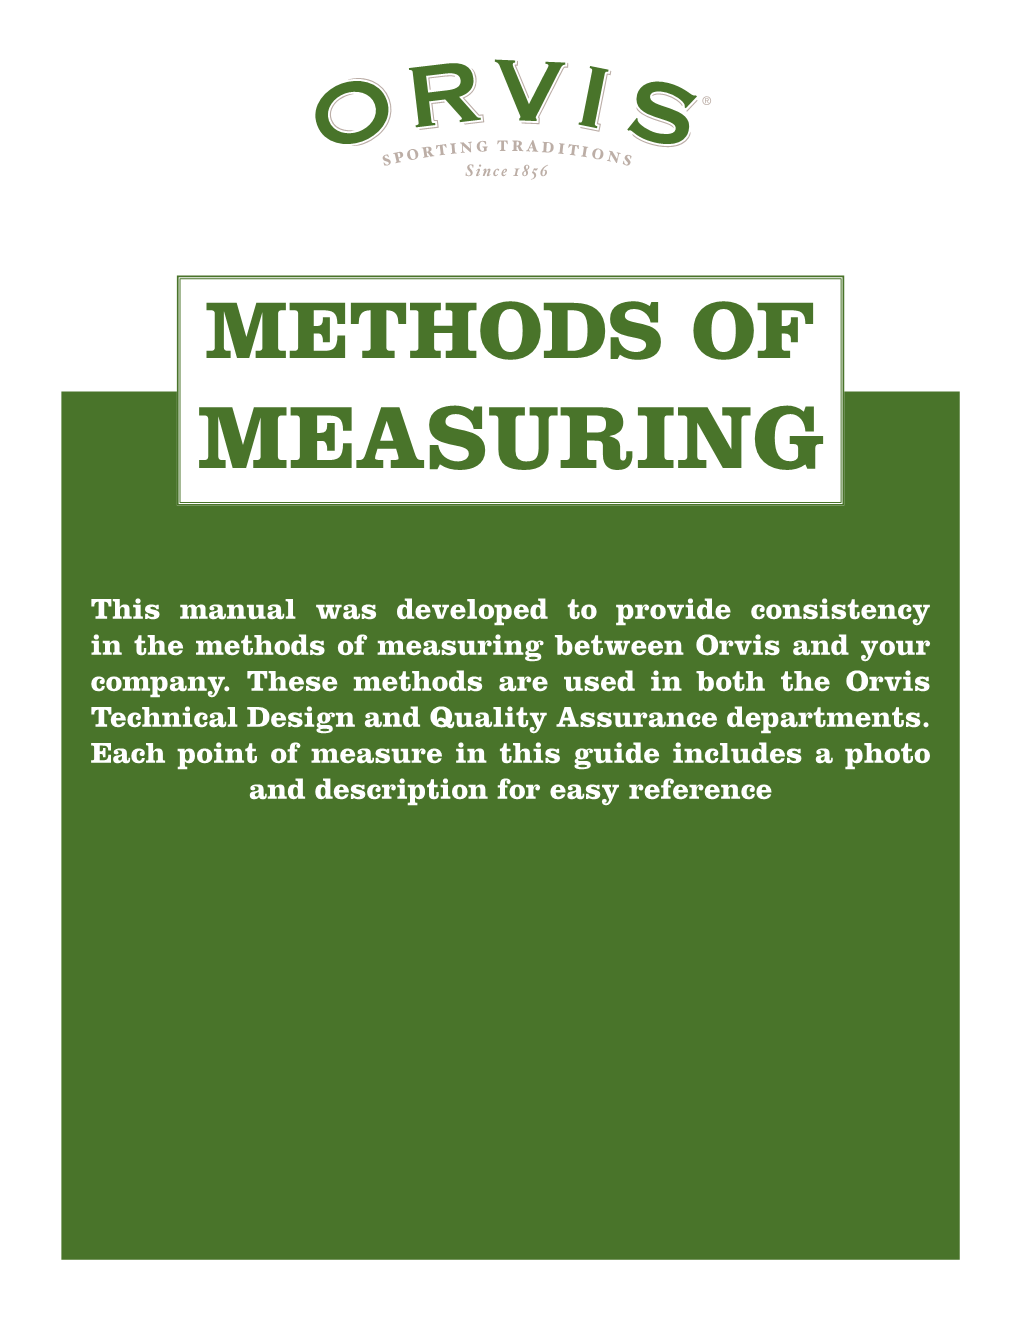 Methods of Measuring